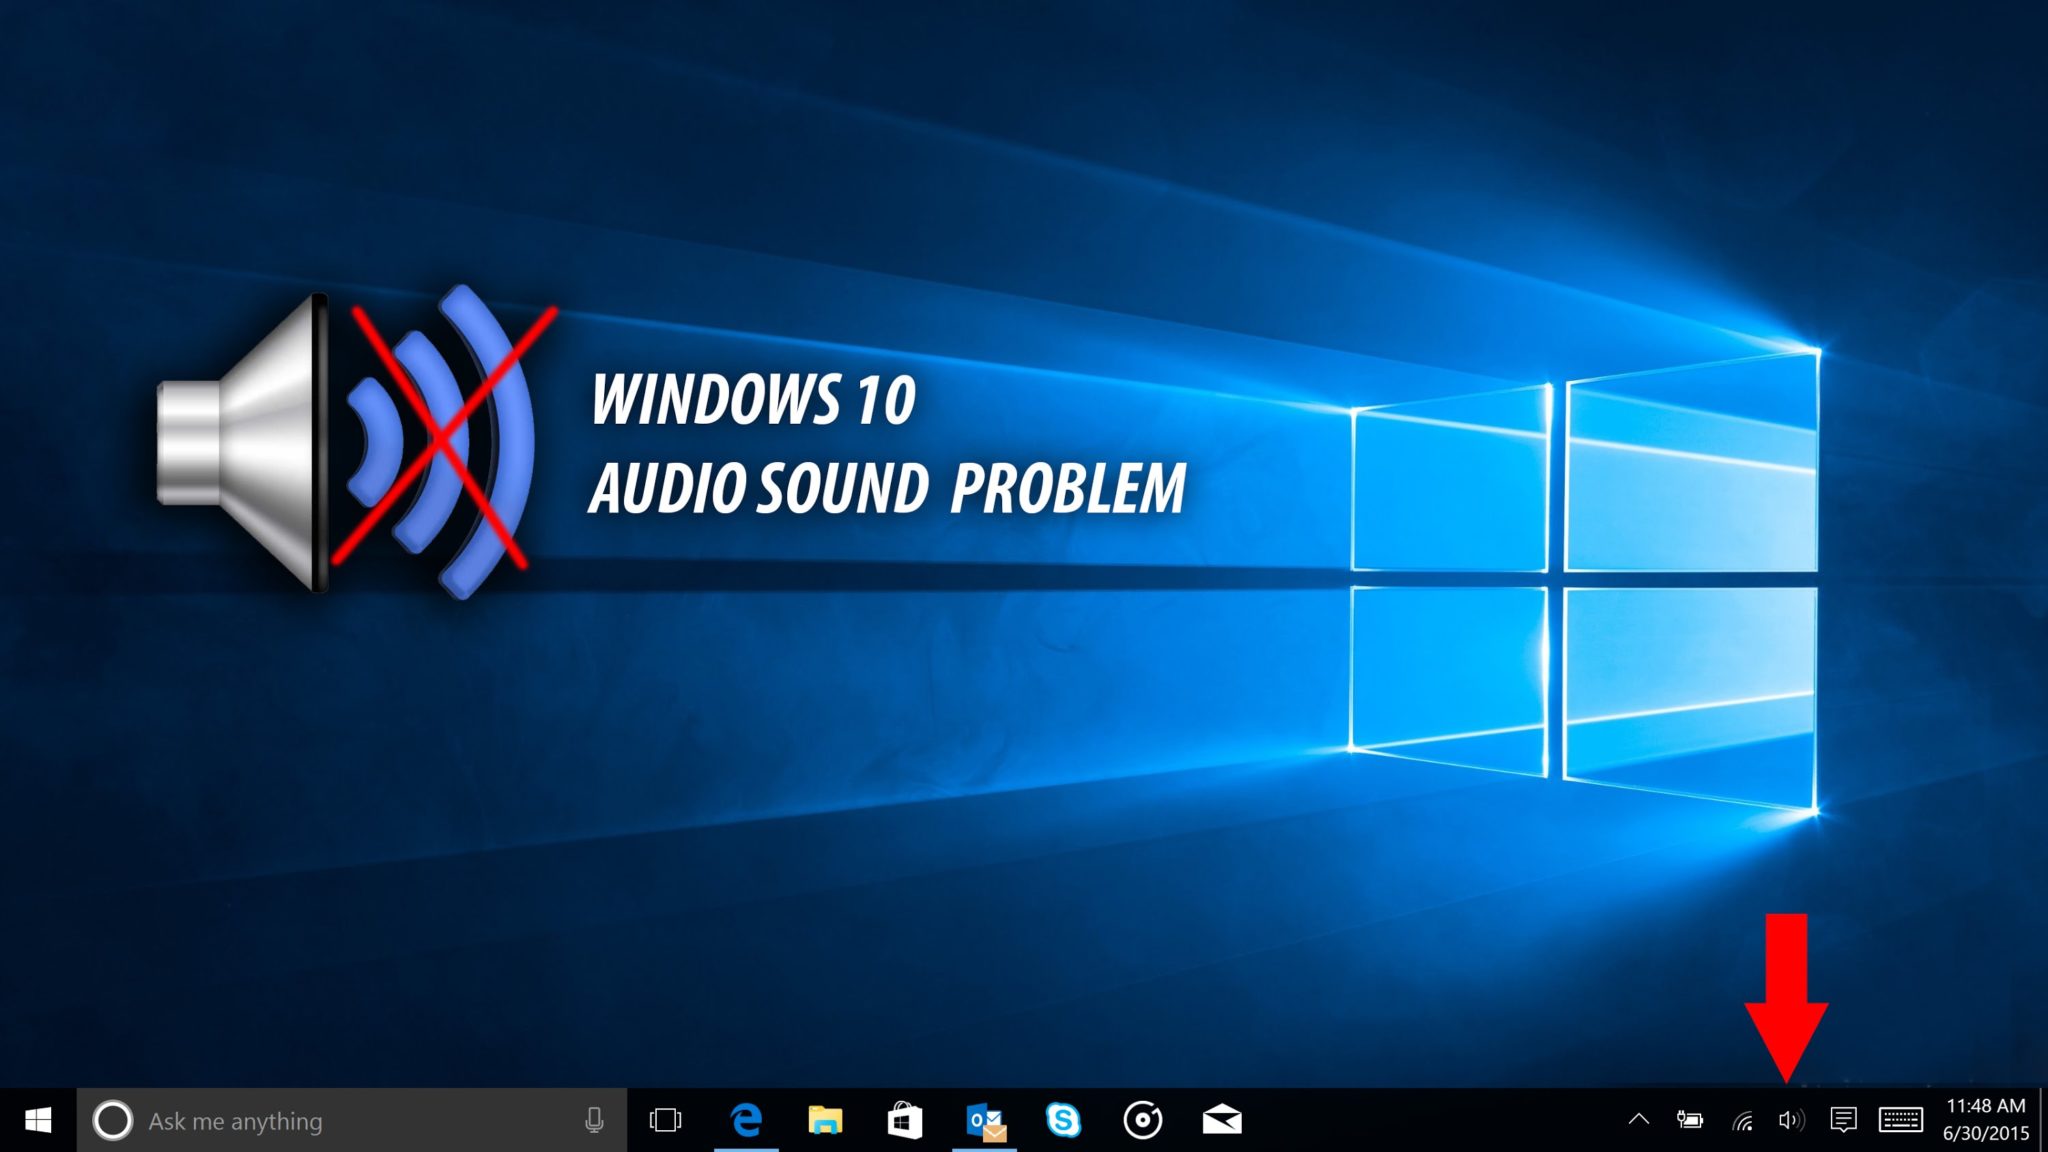 video screensaver no sound on windows 10